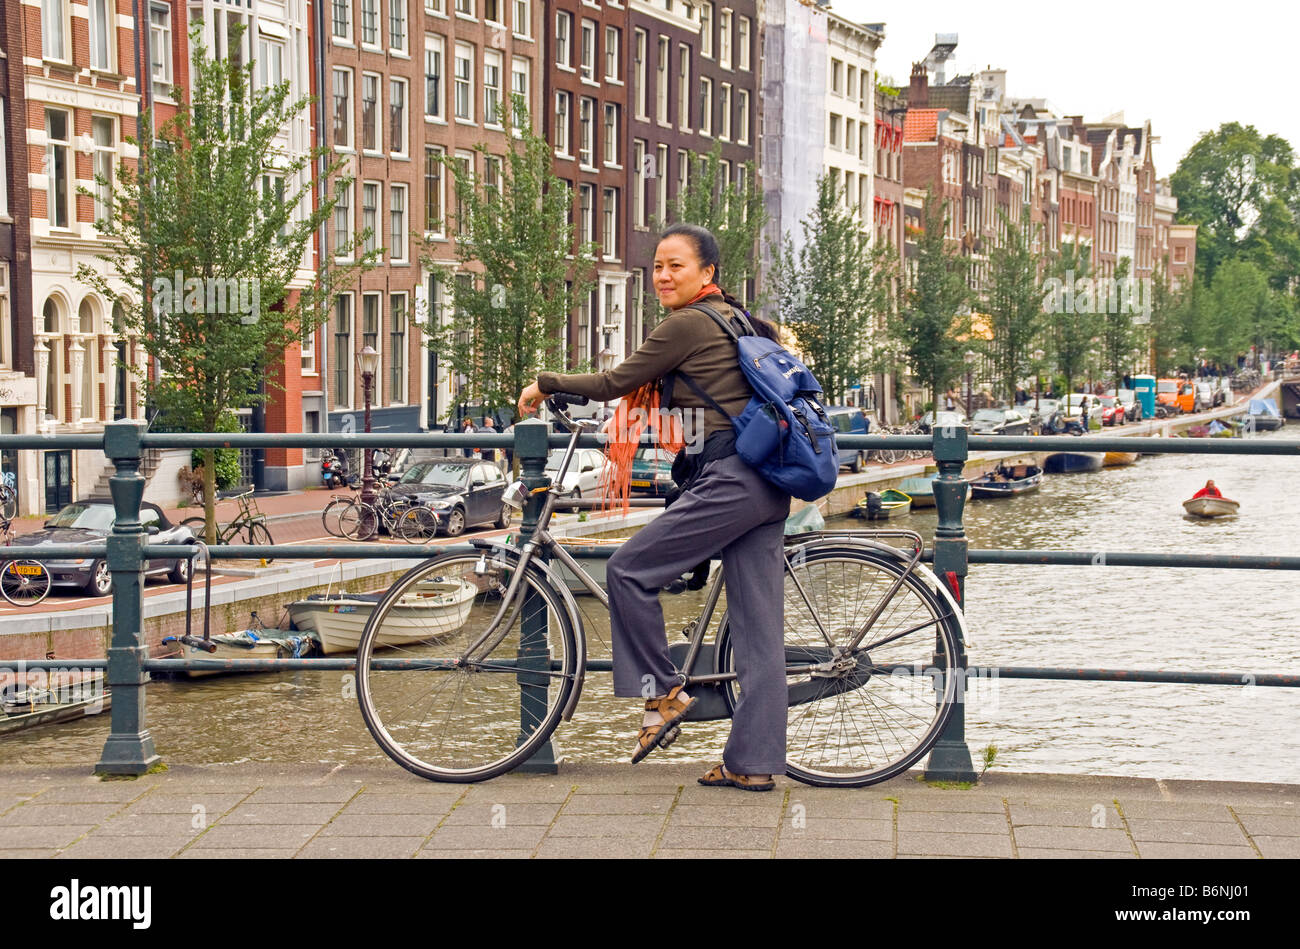 Amsterdam tourist with bike on bridge over canal Stock Photo